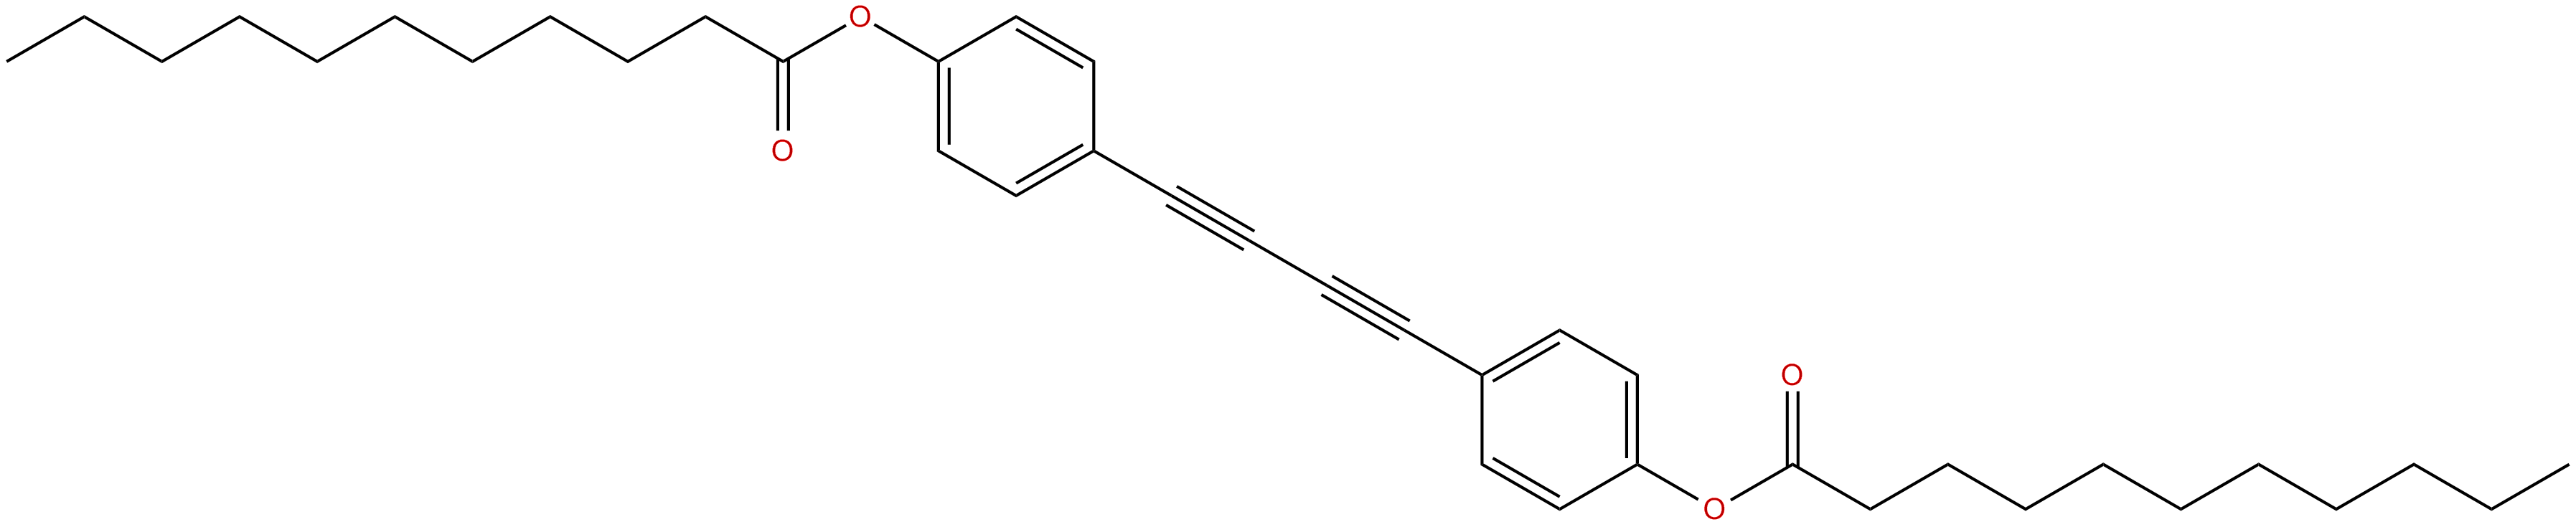 Image of 4,4'-(1,3-butadiynl-1,4-diyl)bis(4,1-phenyleneundecanoate)